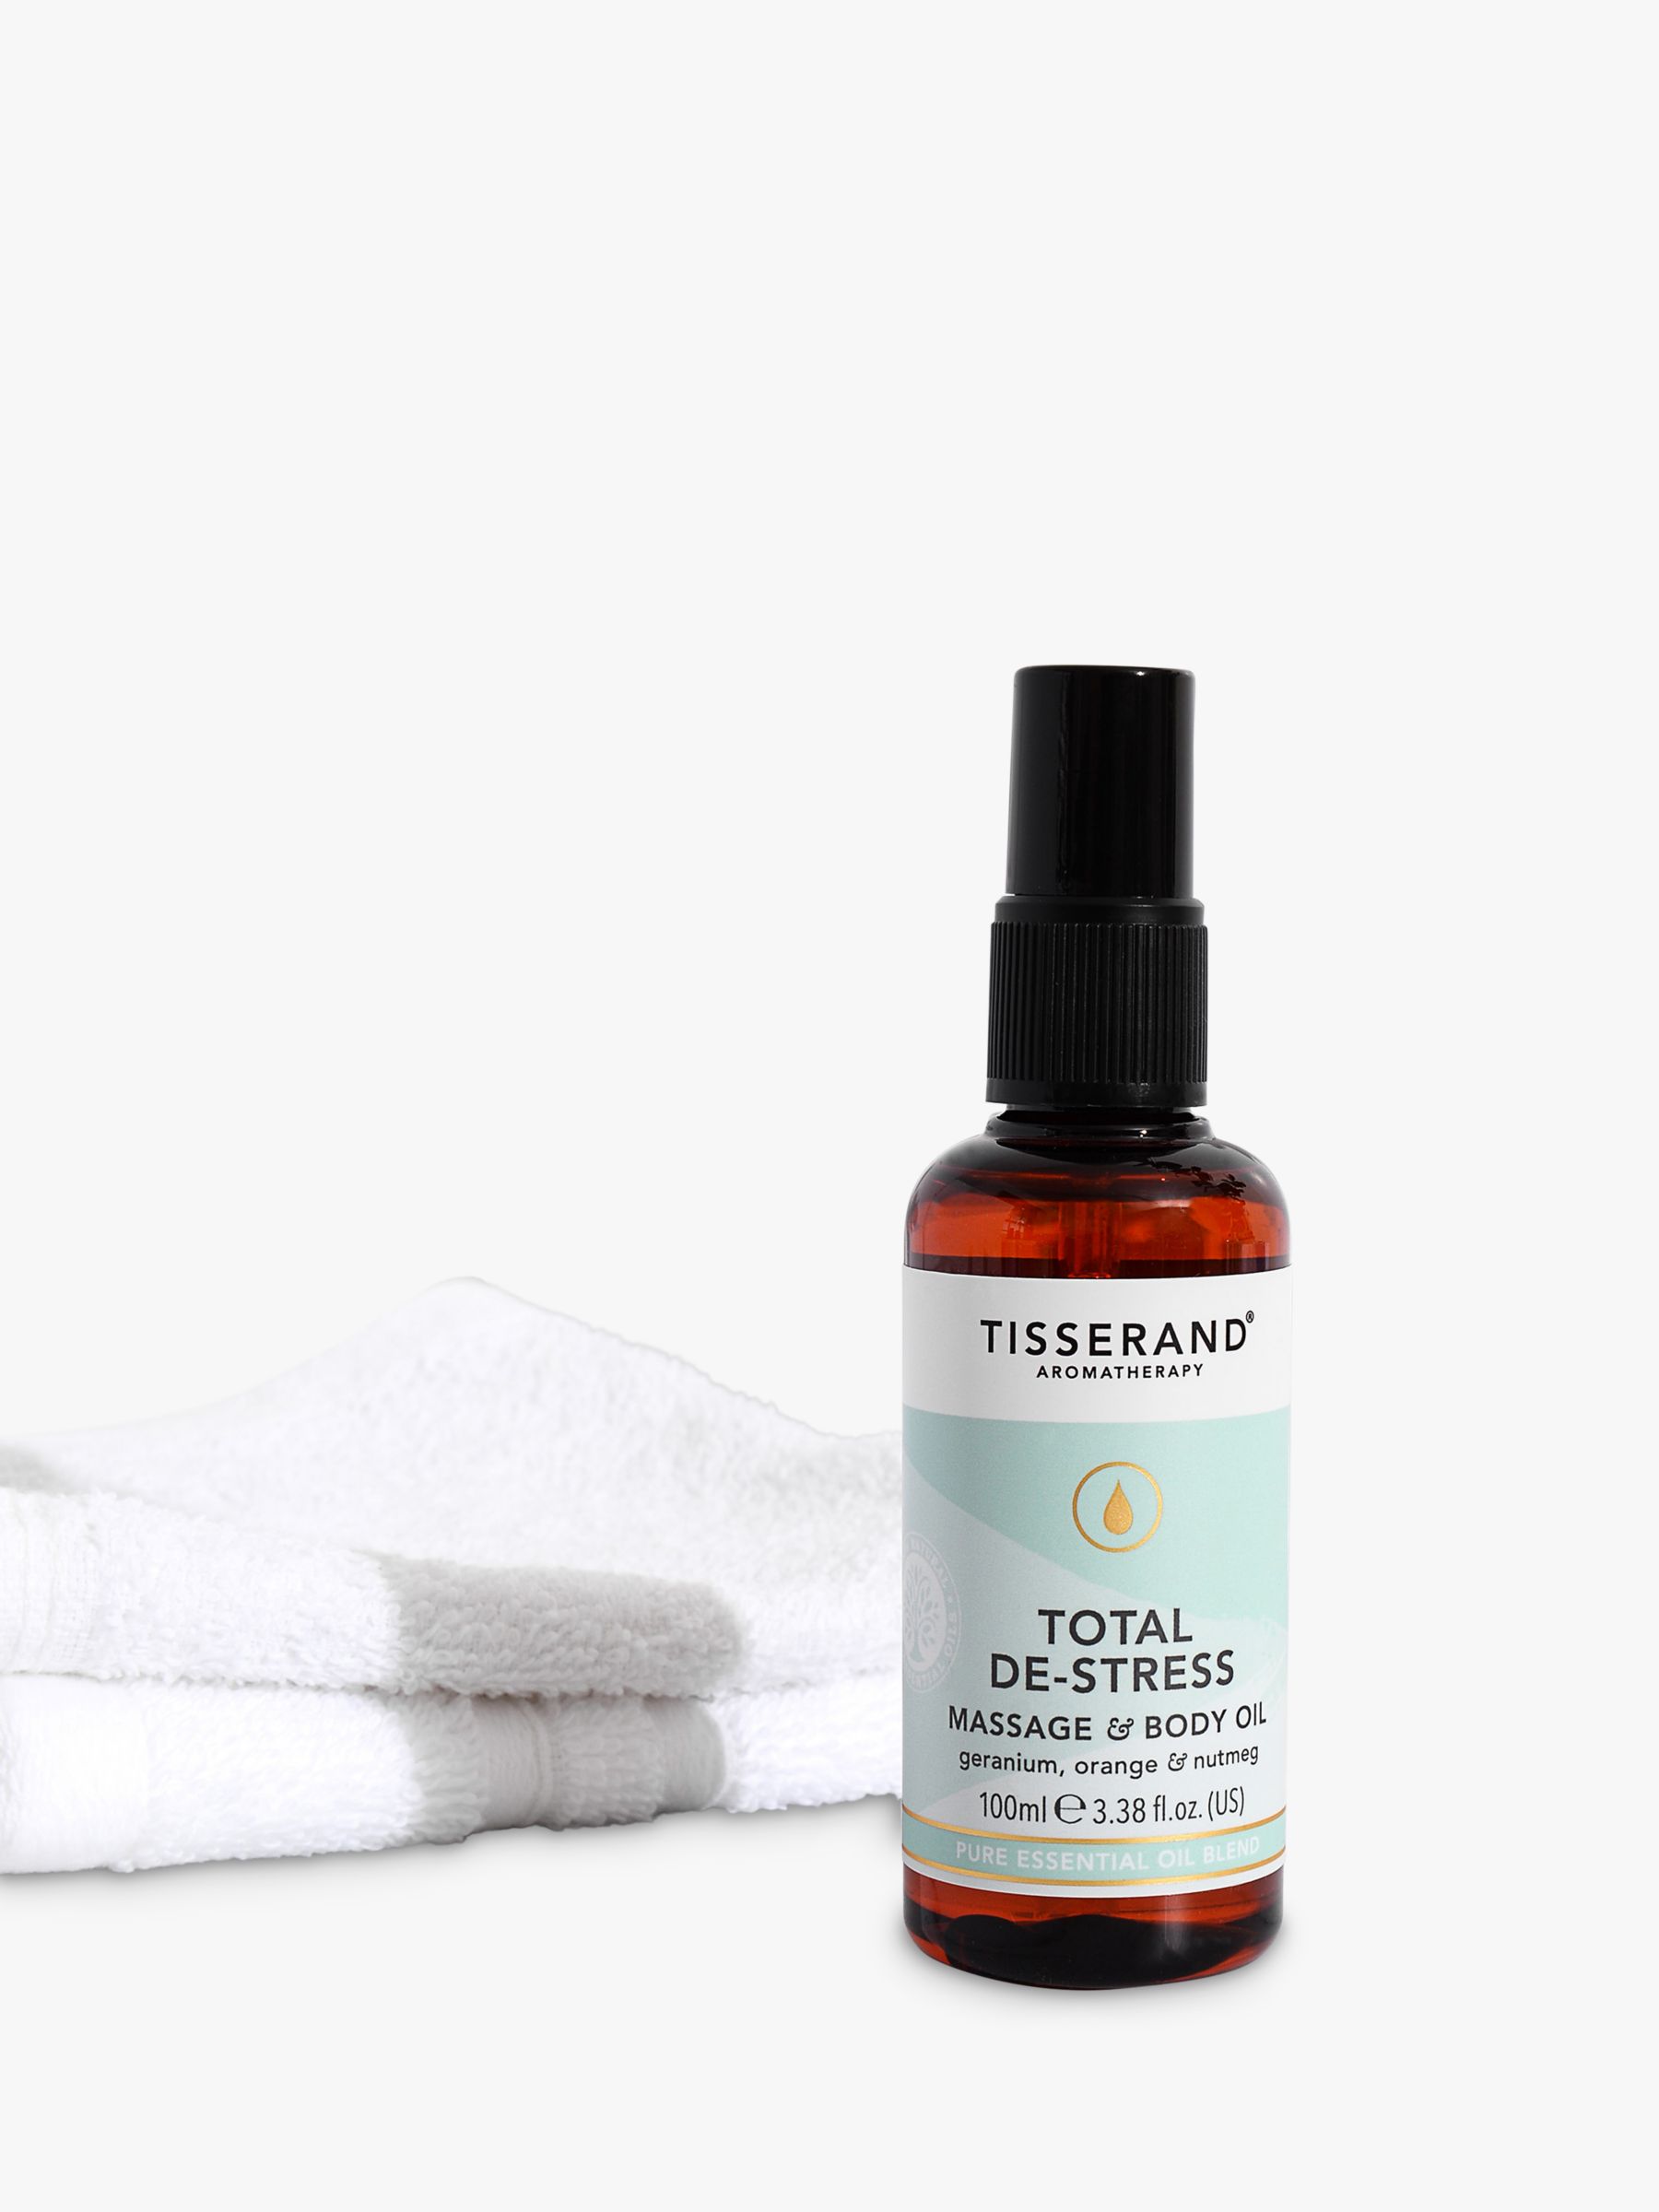 Tisserand Aromatherapy Total De-Stress Massage and Body Oil, 100ml 1